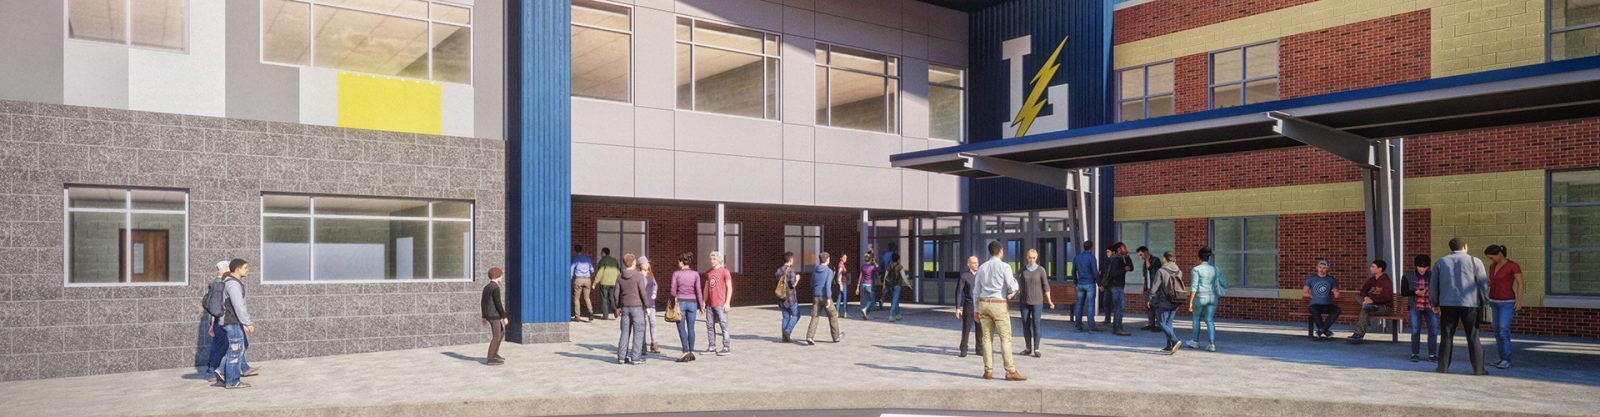 Littlestown Area School District – New Secondary School